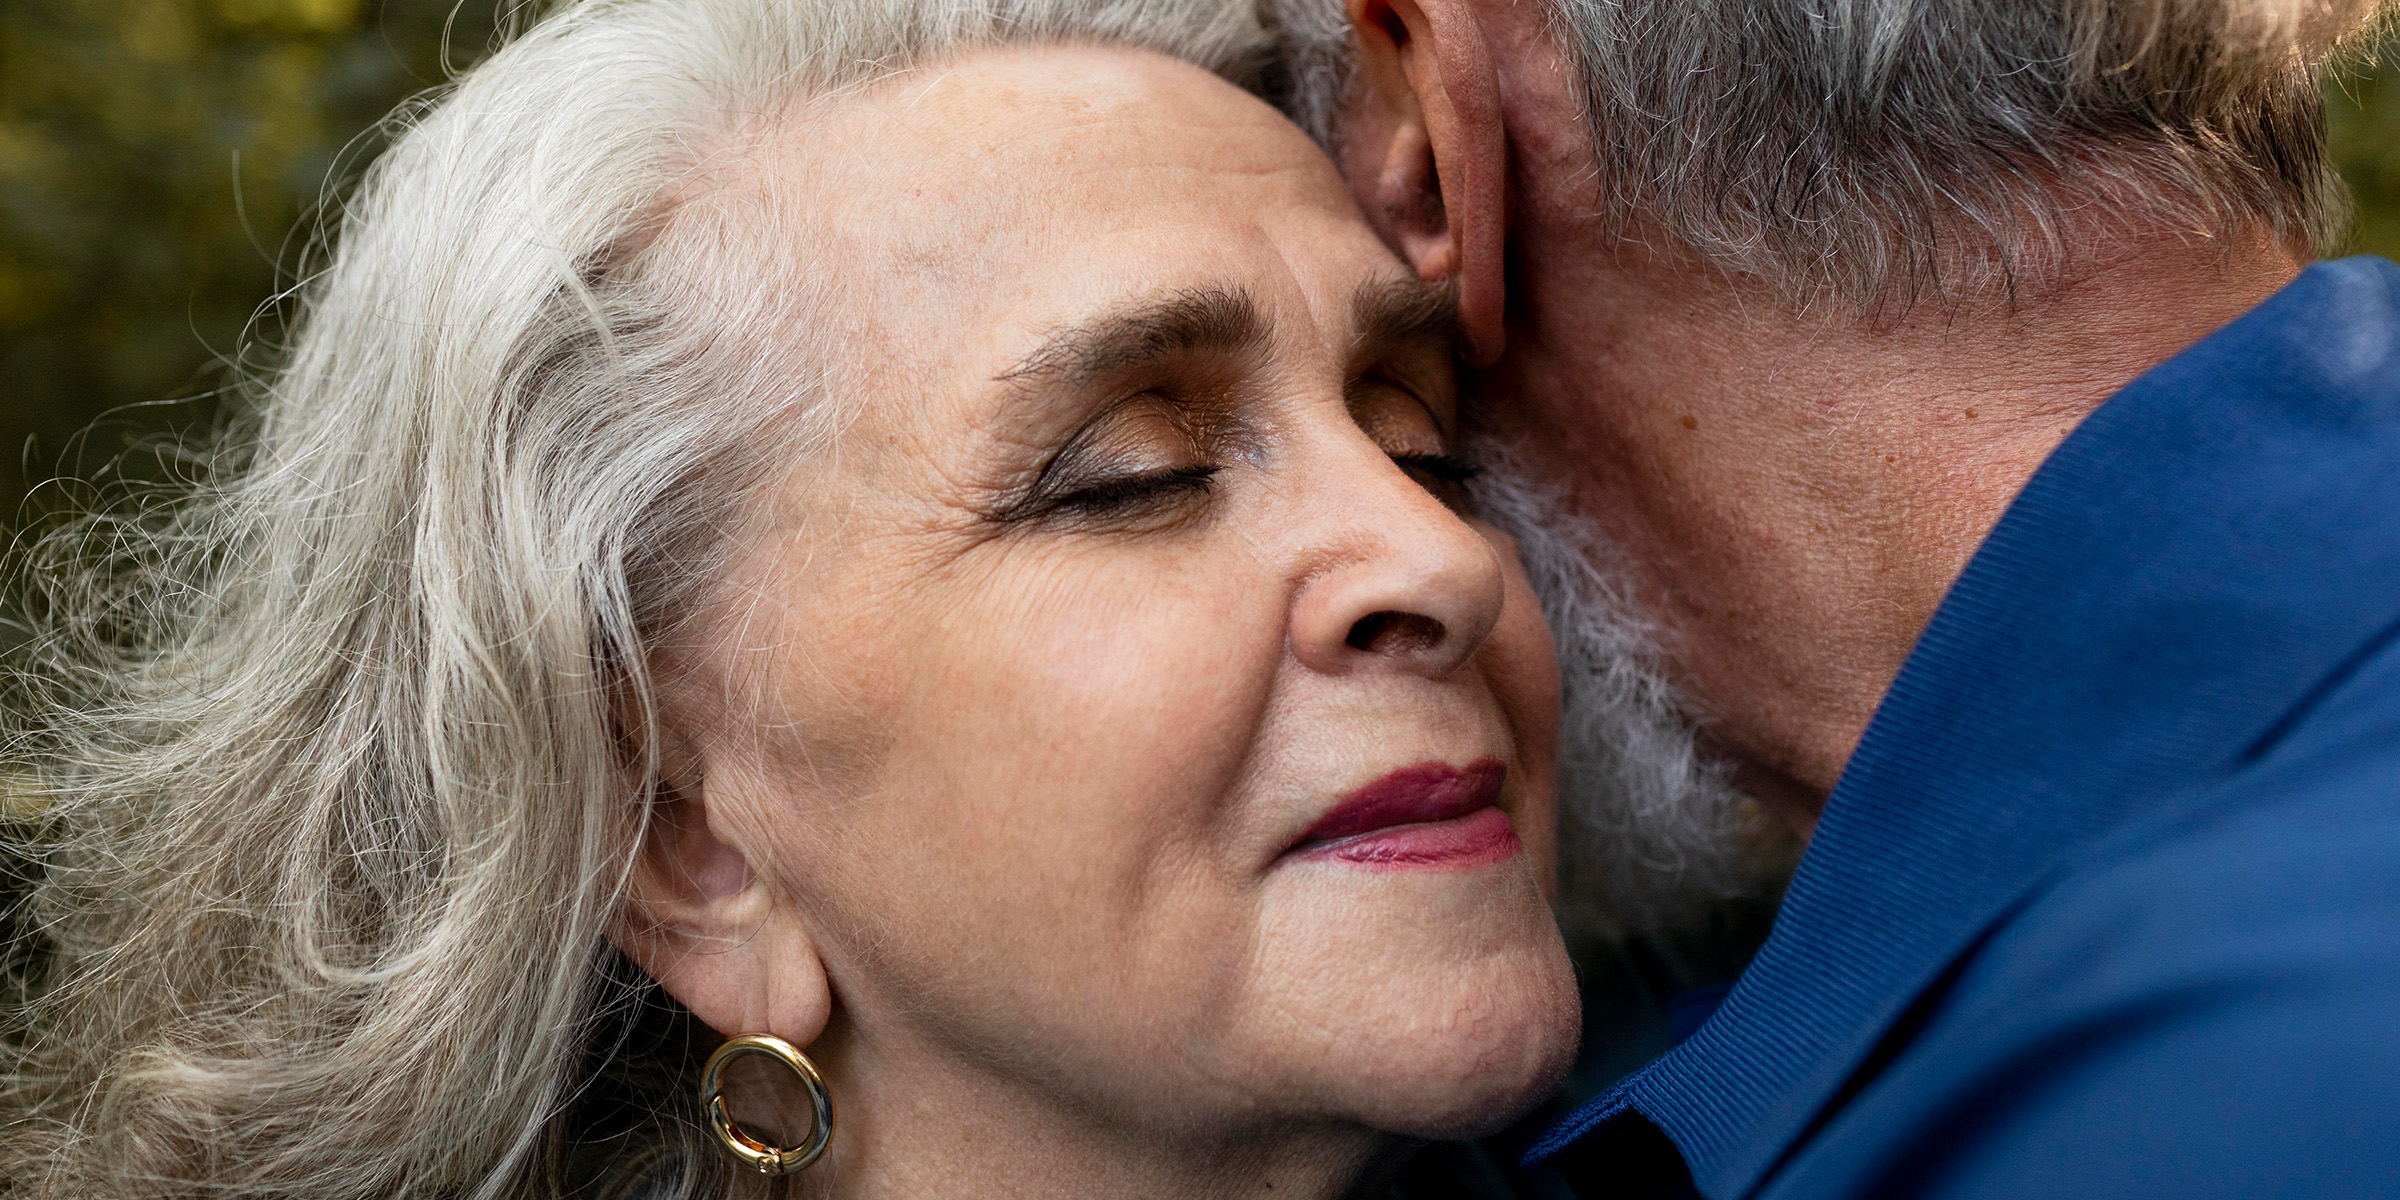 A happy elderly couple embracing | Source: Freepik